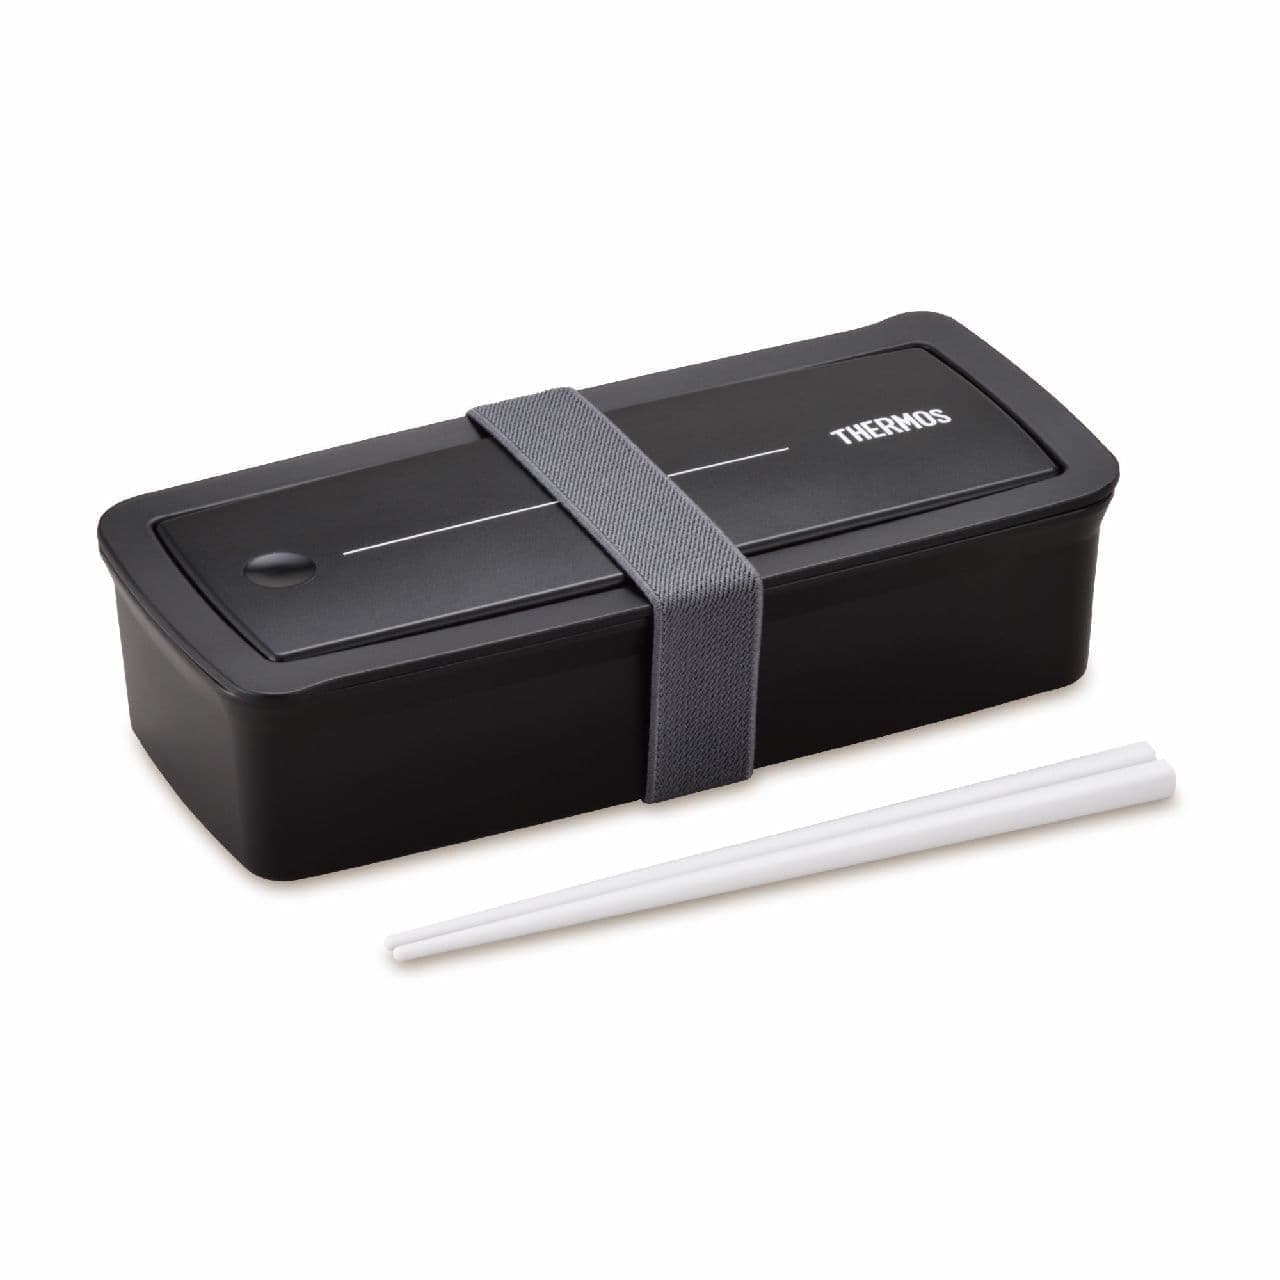 "Thermos Fresh Lunch Box (DJS-700 / 980W)" for men with plenty of storage --Neat storage in a bag